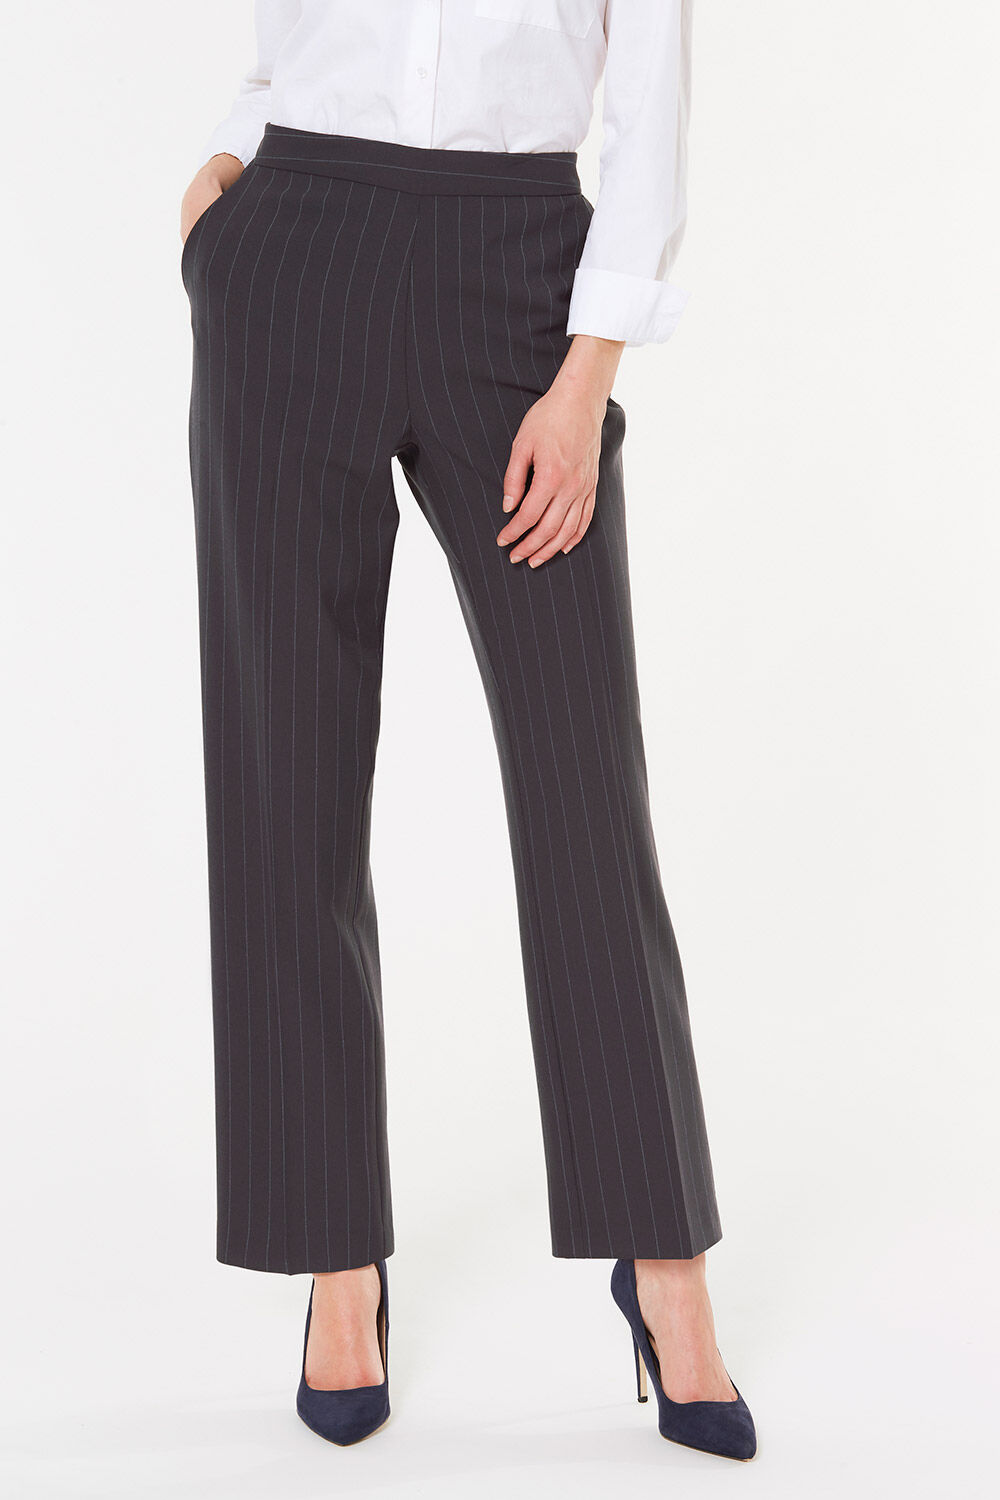 Bonmarche Workwear Classic Straight Leg Stripe Pull On Trouser - Navy, Size: 16